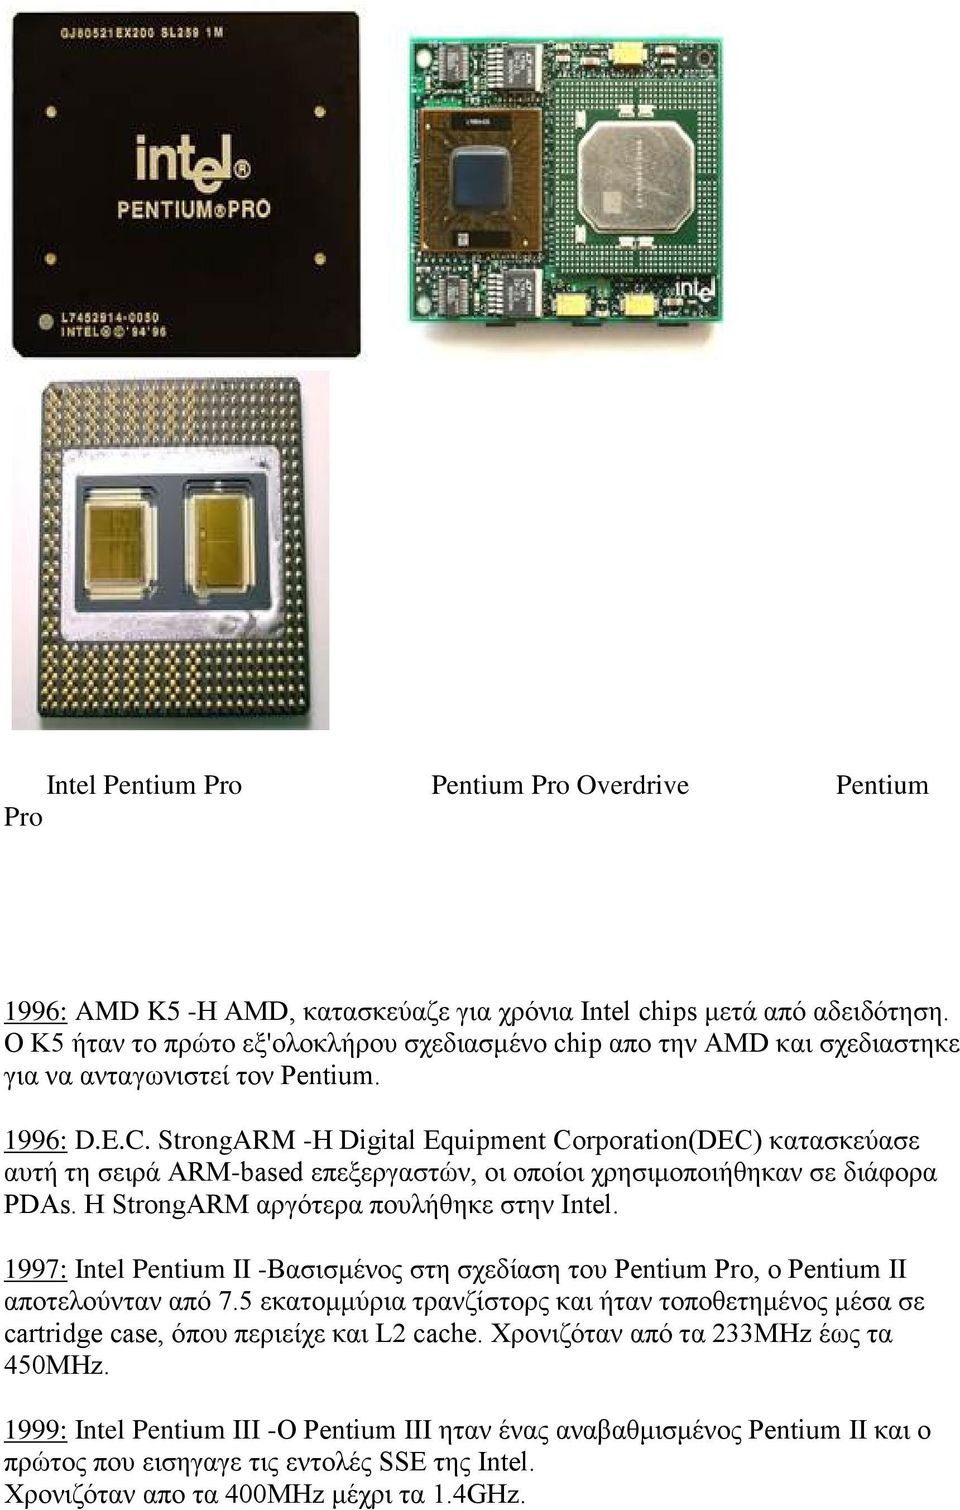 StrongARM -H Digital Equipment Corporation(DEC) κατασκεύασε αυτή τη σειρά ARM-based επεξεργαστών, οι οποίοι χρησιμοποιήθηκαν σε διάφορα PDAs. H StrongARM αργότερα πουλήθηκε στην Intel.